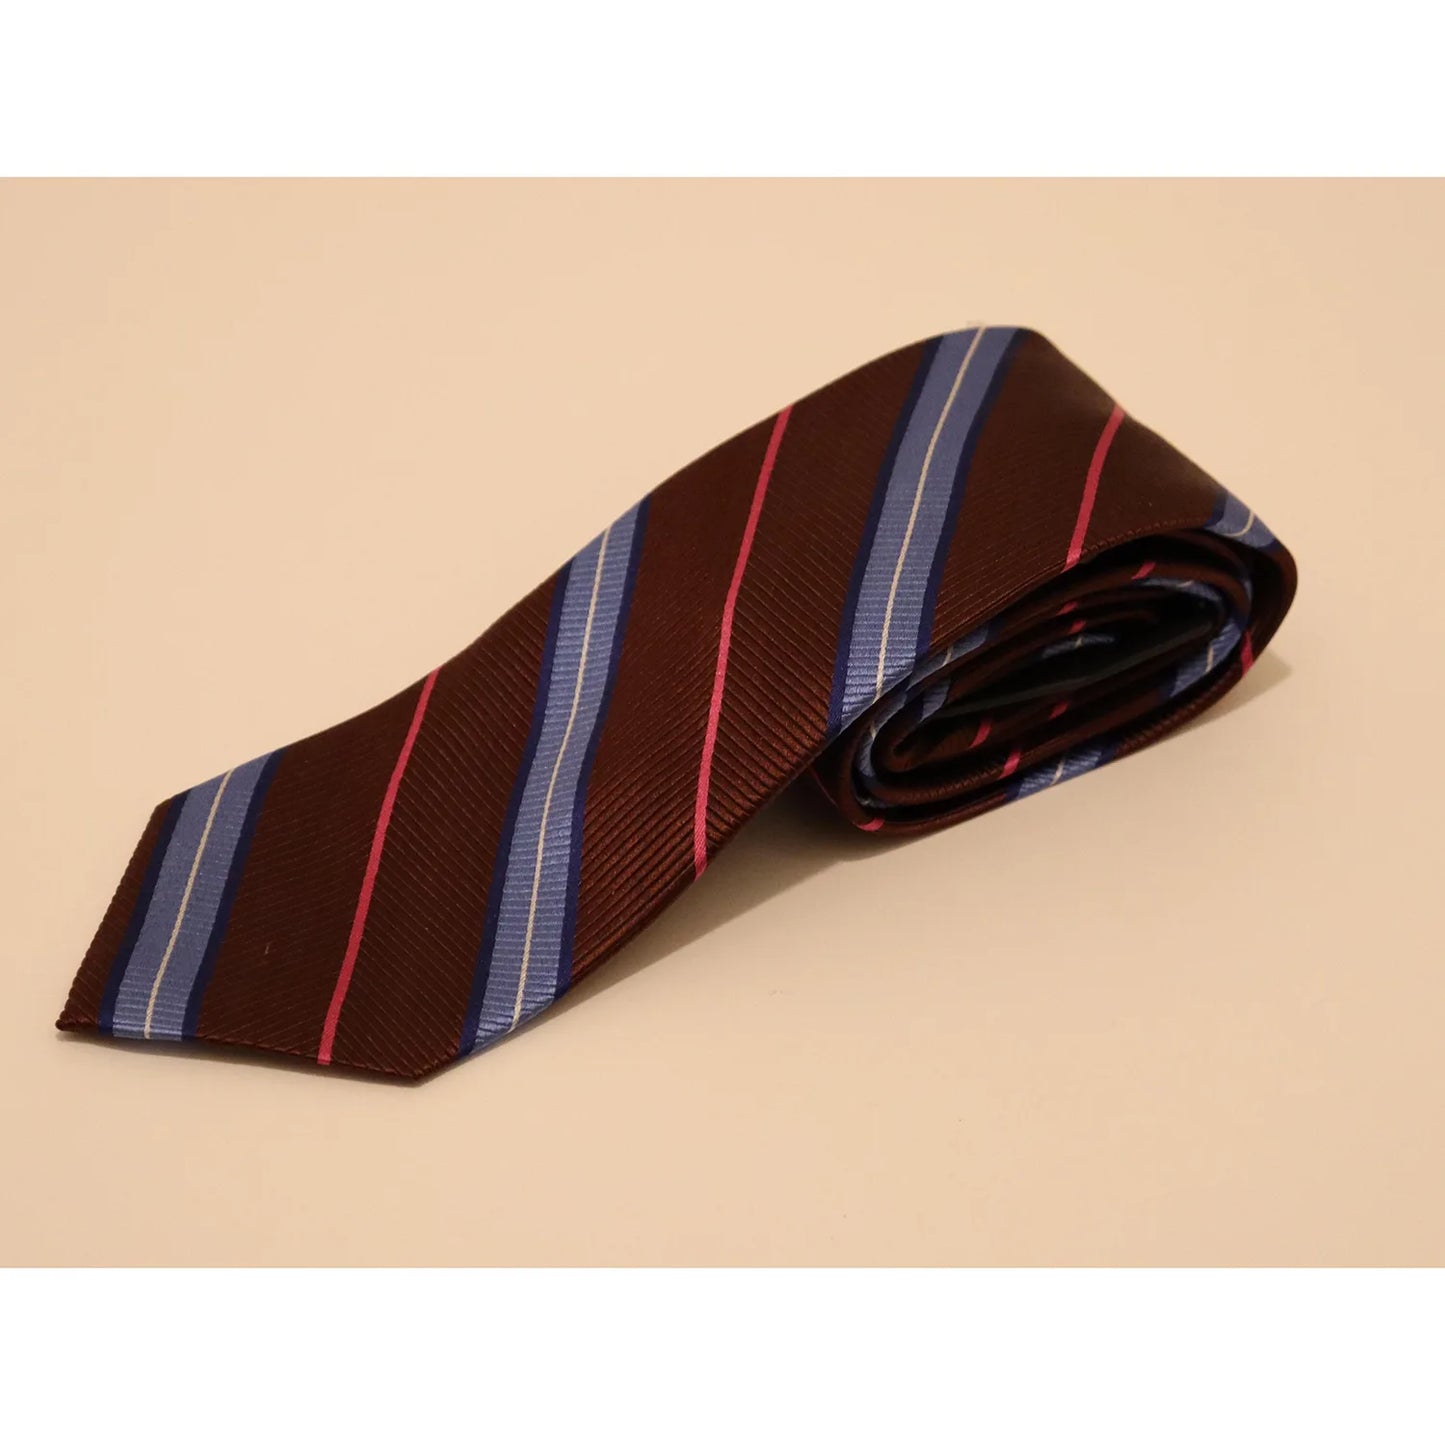 The Shirt Shop Tie - Brown, Light Blue, Royal Blue, Pink Stripe